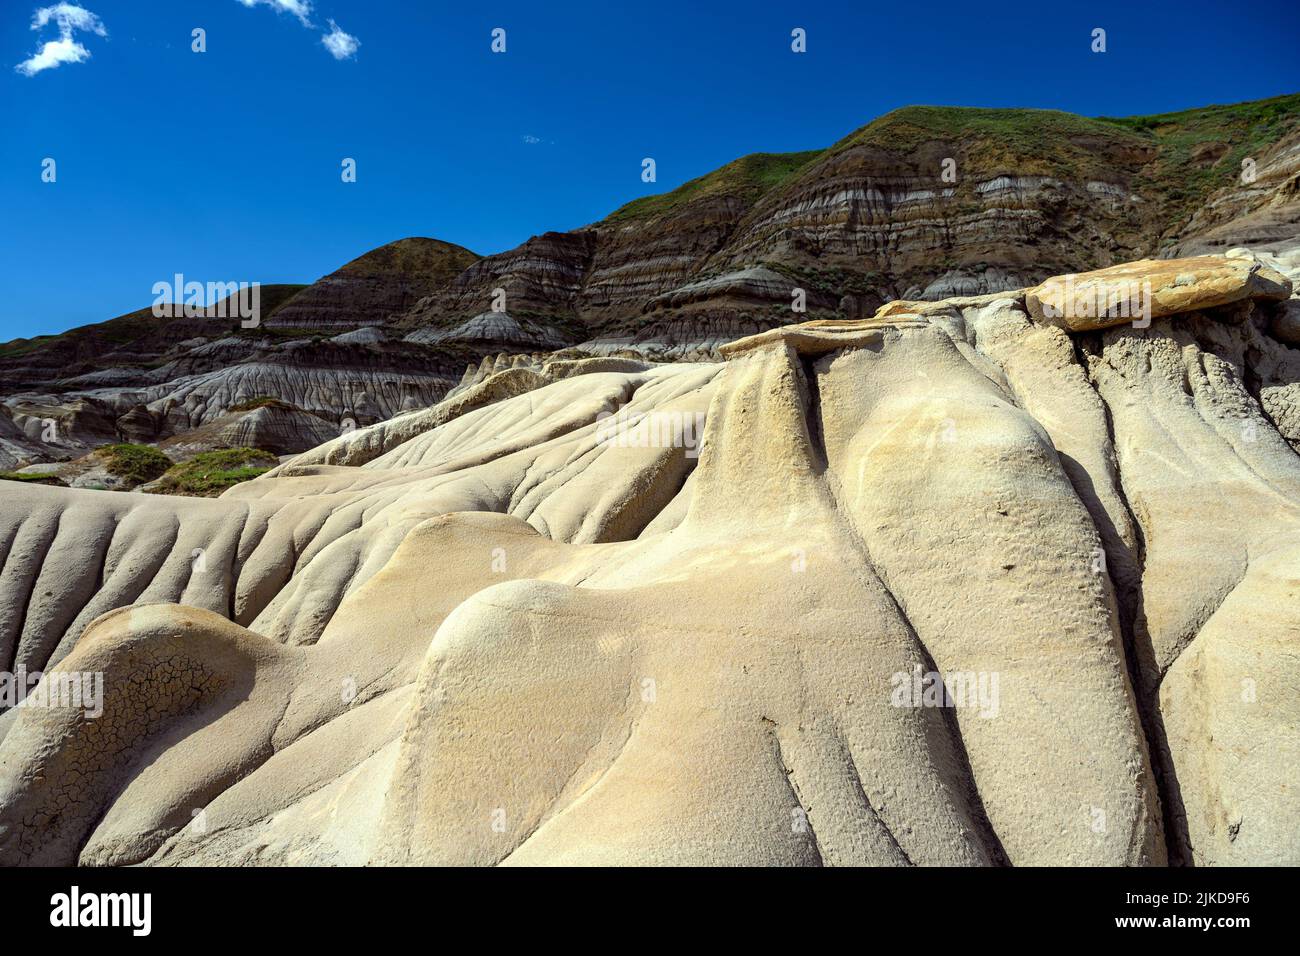 Sandstone Hoodoos and rock formations in the Canadian Badlands, Drumheller, Alberta, Canada. Stock Photo